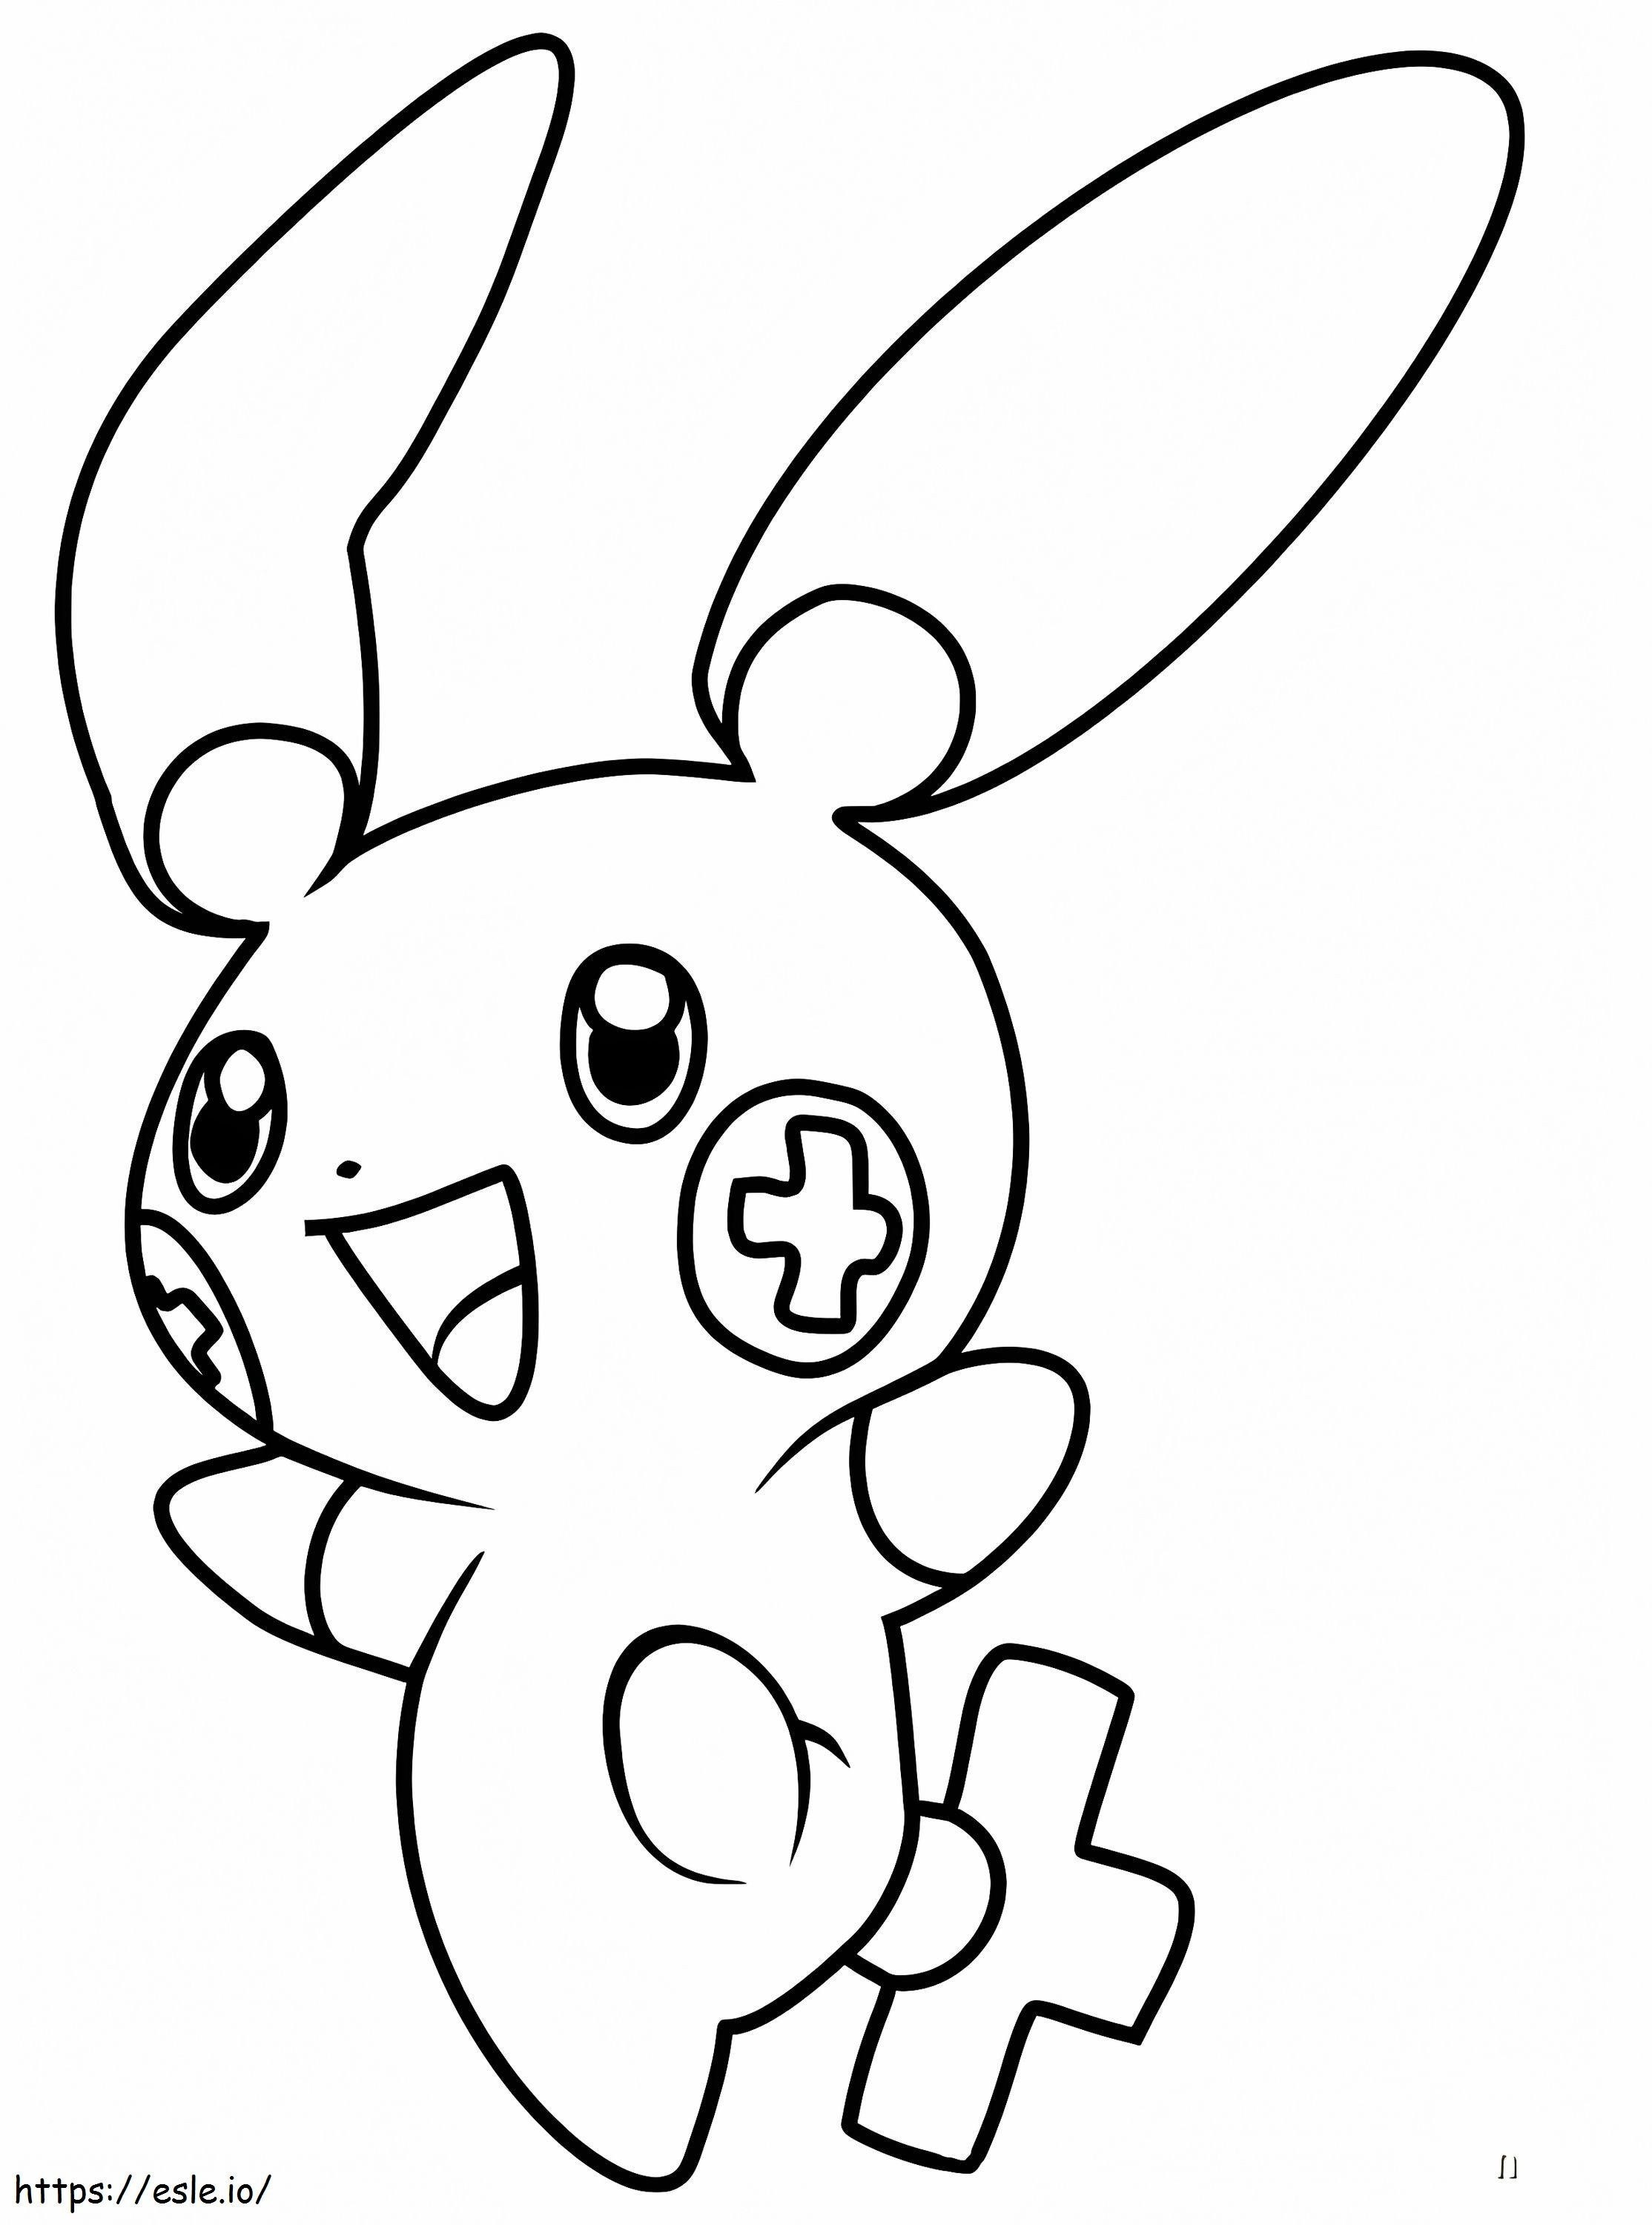 Plusle Gen 3 Pokemon coloring page